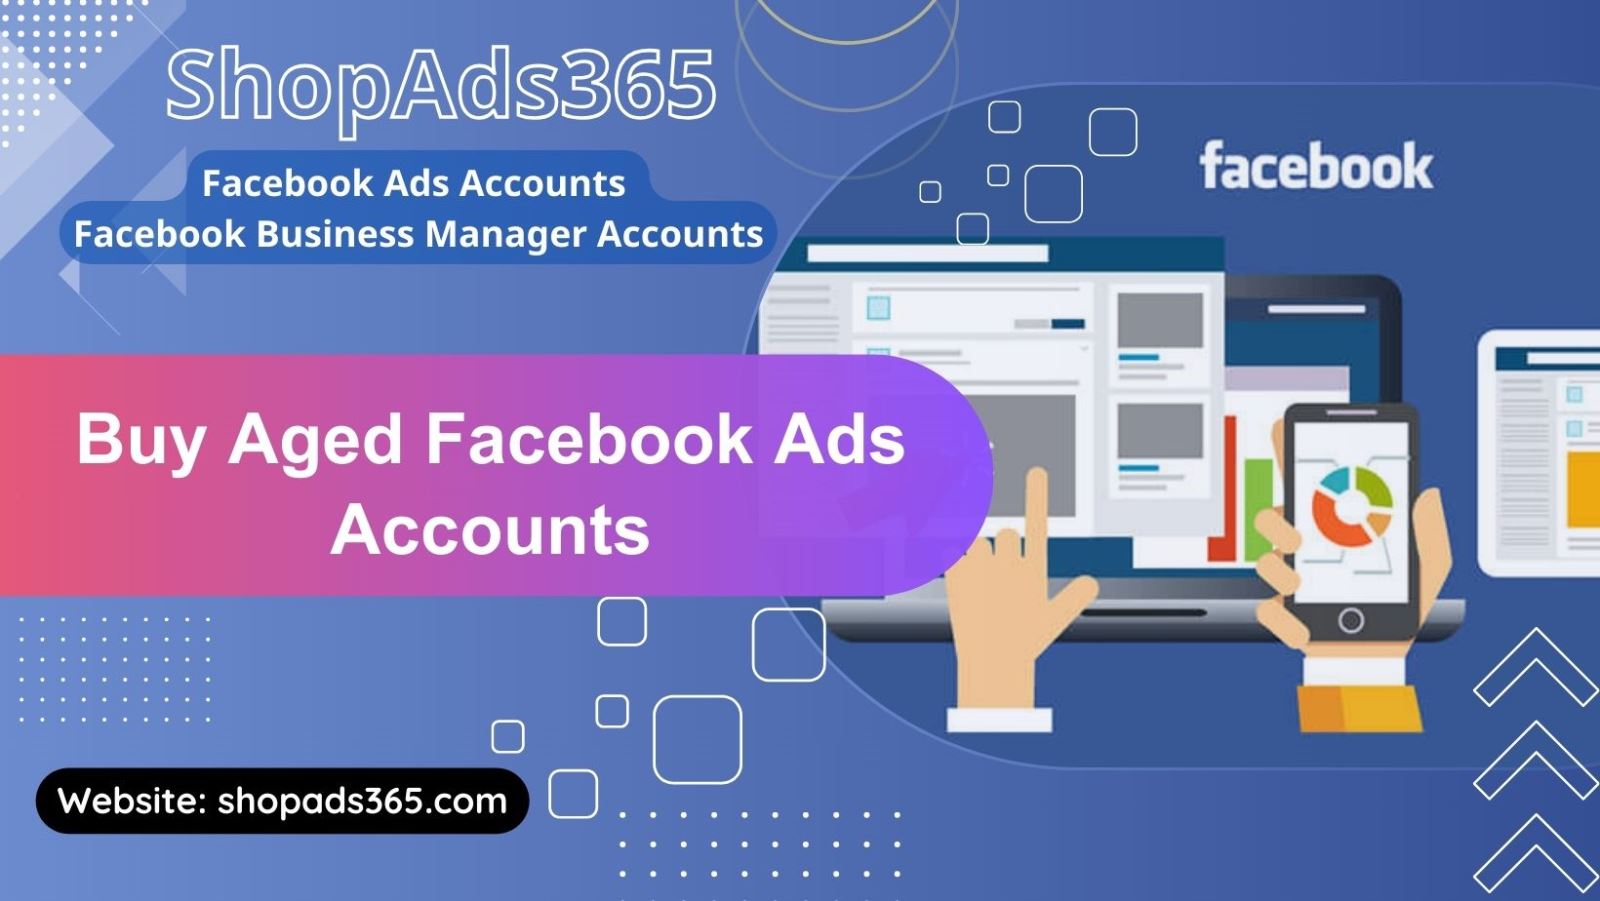 Buy aged Facebook accounts